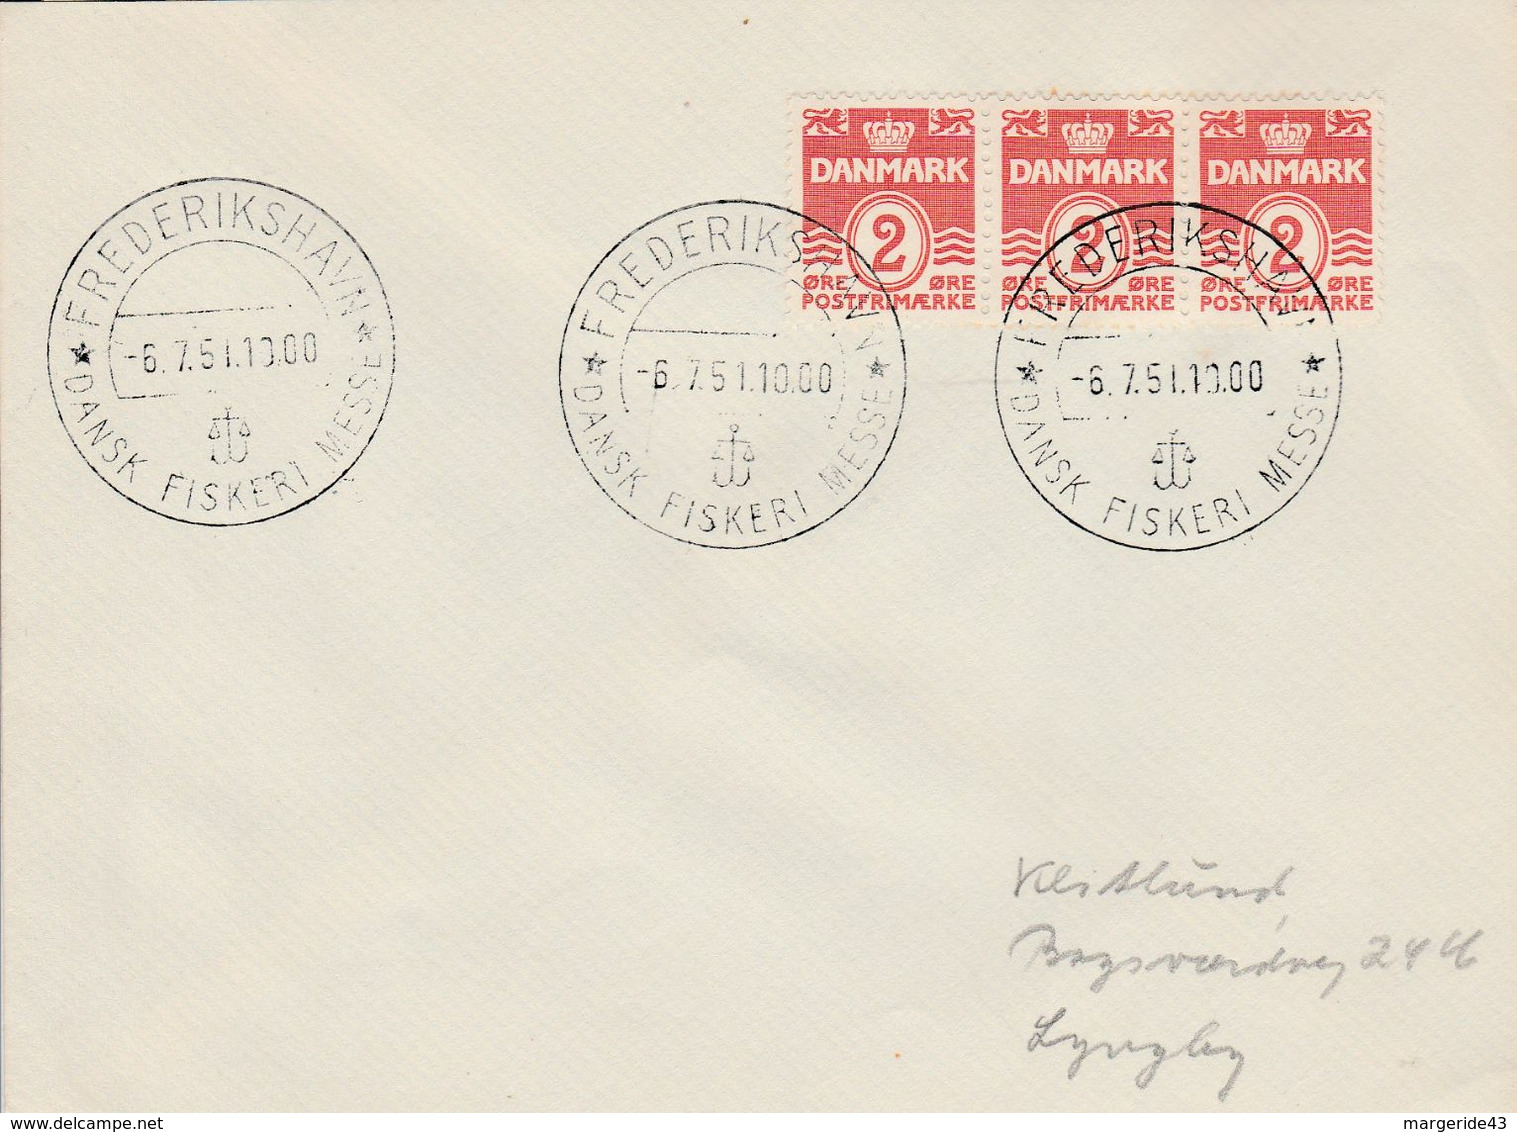 DANEMARK 1951 SERIE COURANTE - OBLITERATION FREDERIKSHAVN - Frankeermachines (EMA)